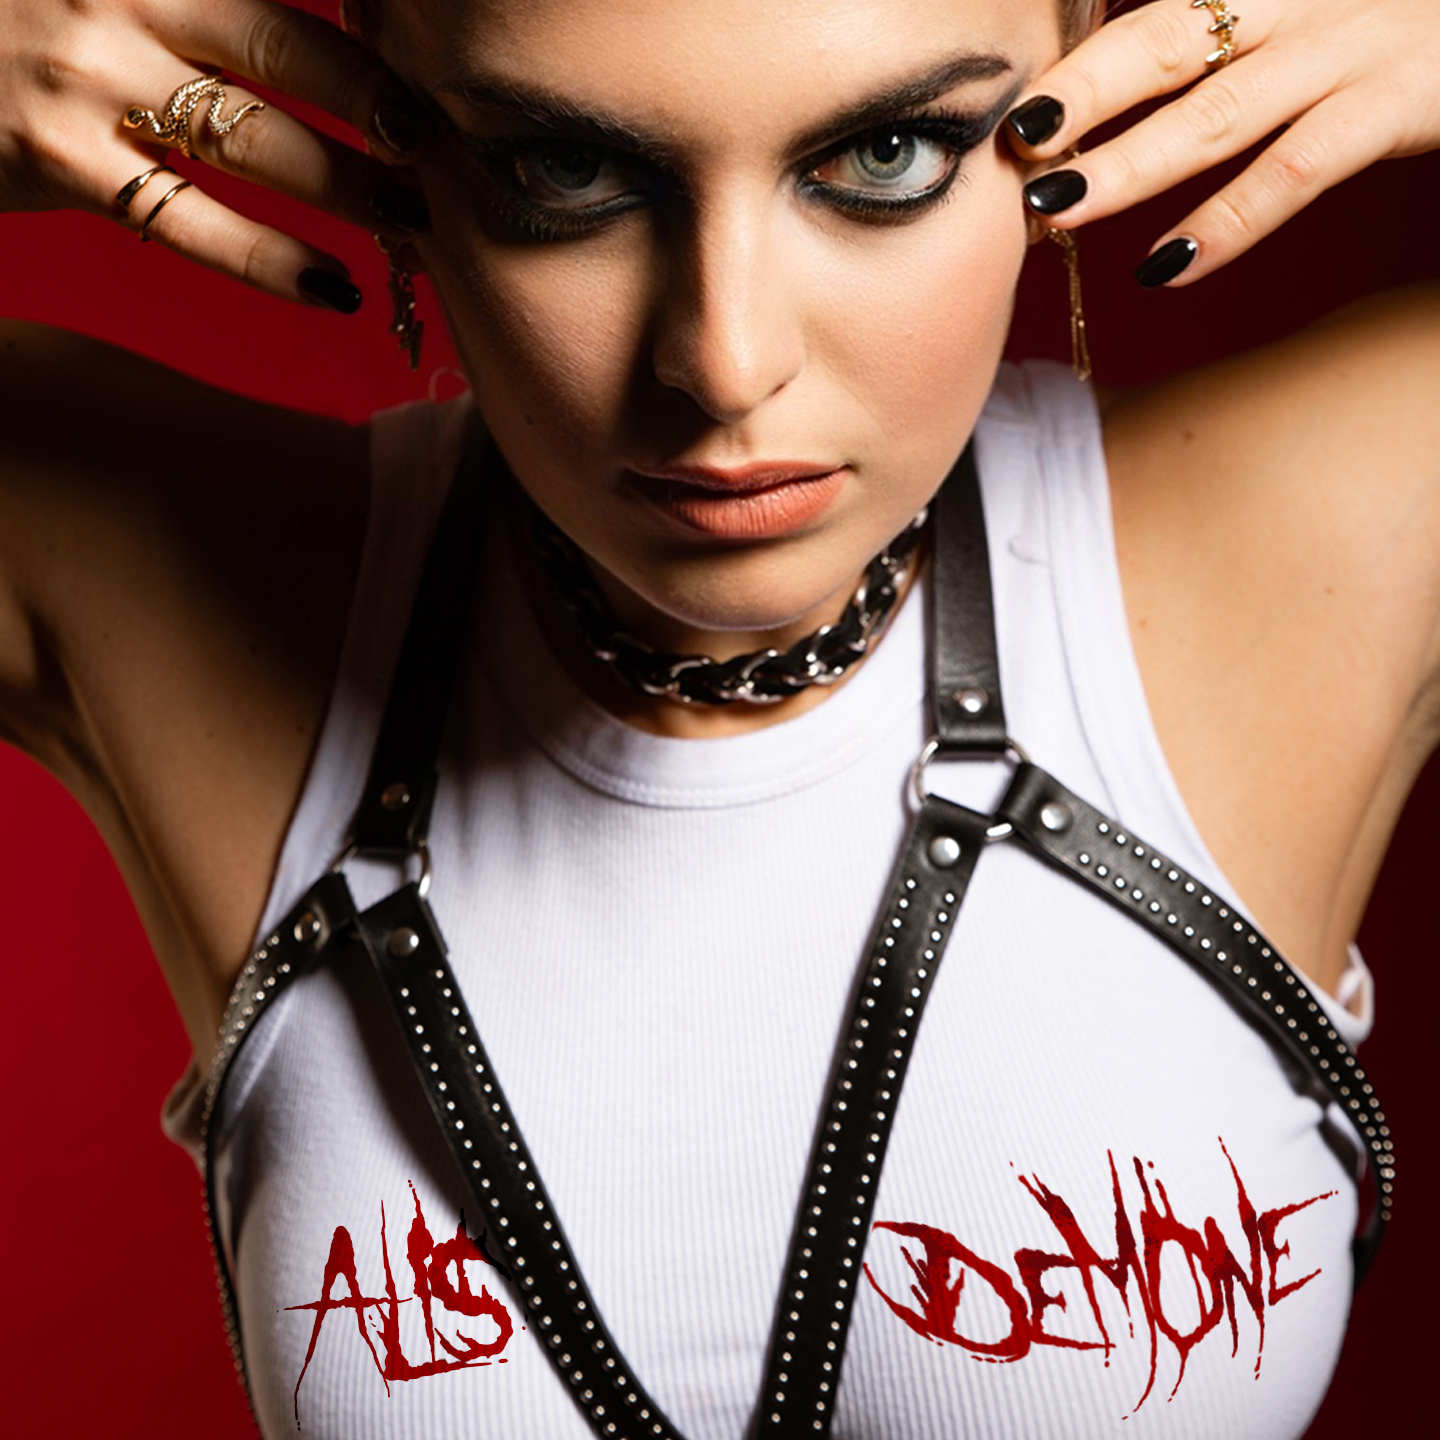 Alis – “Demone”